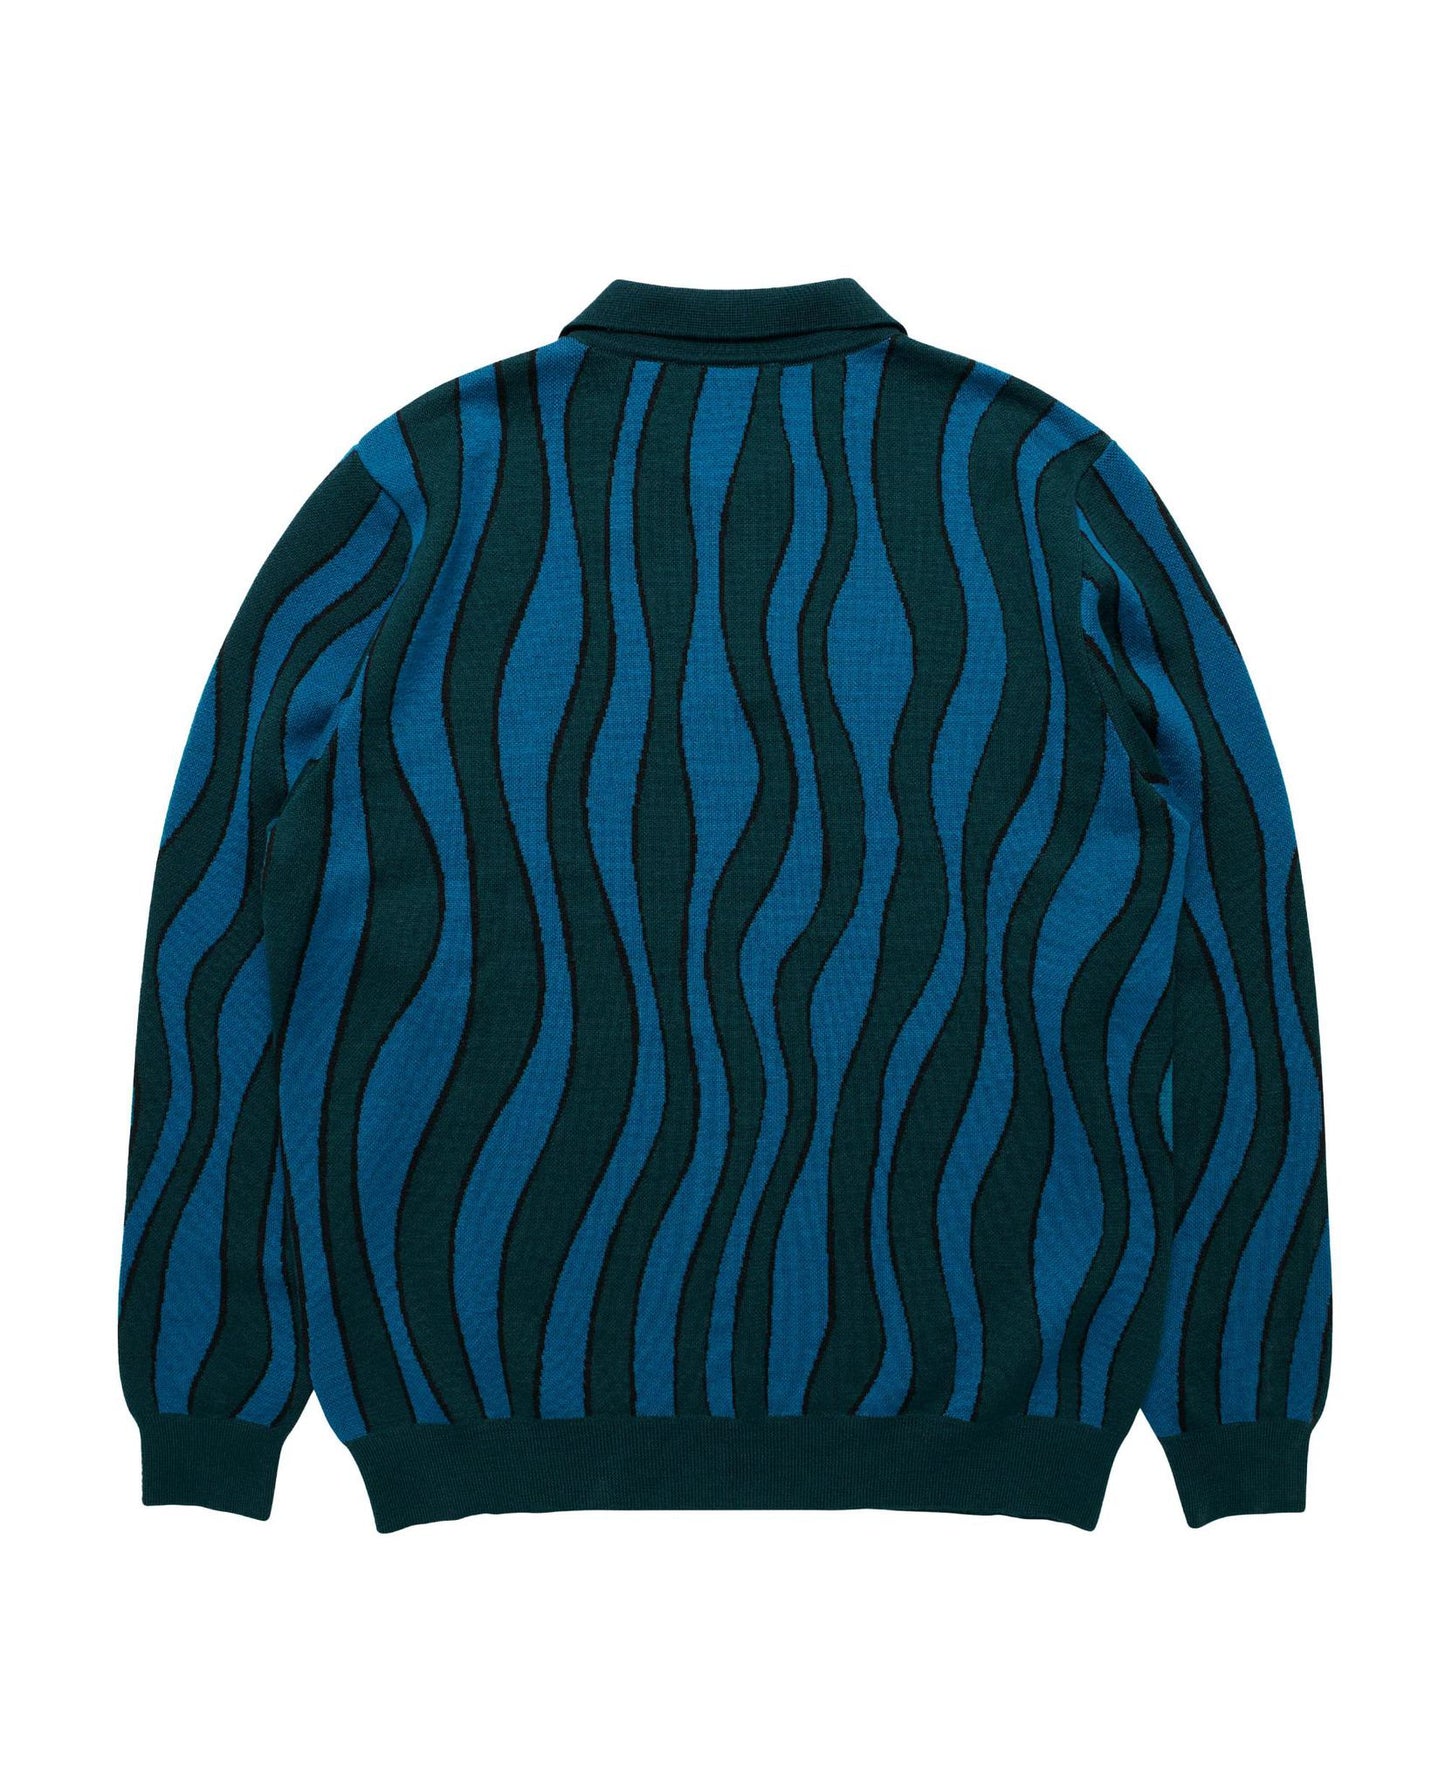 Louis Vuitton Embroidered Cotton Sweatshirt Aqua. Size M0